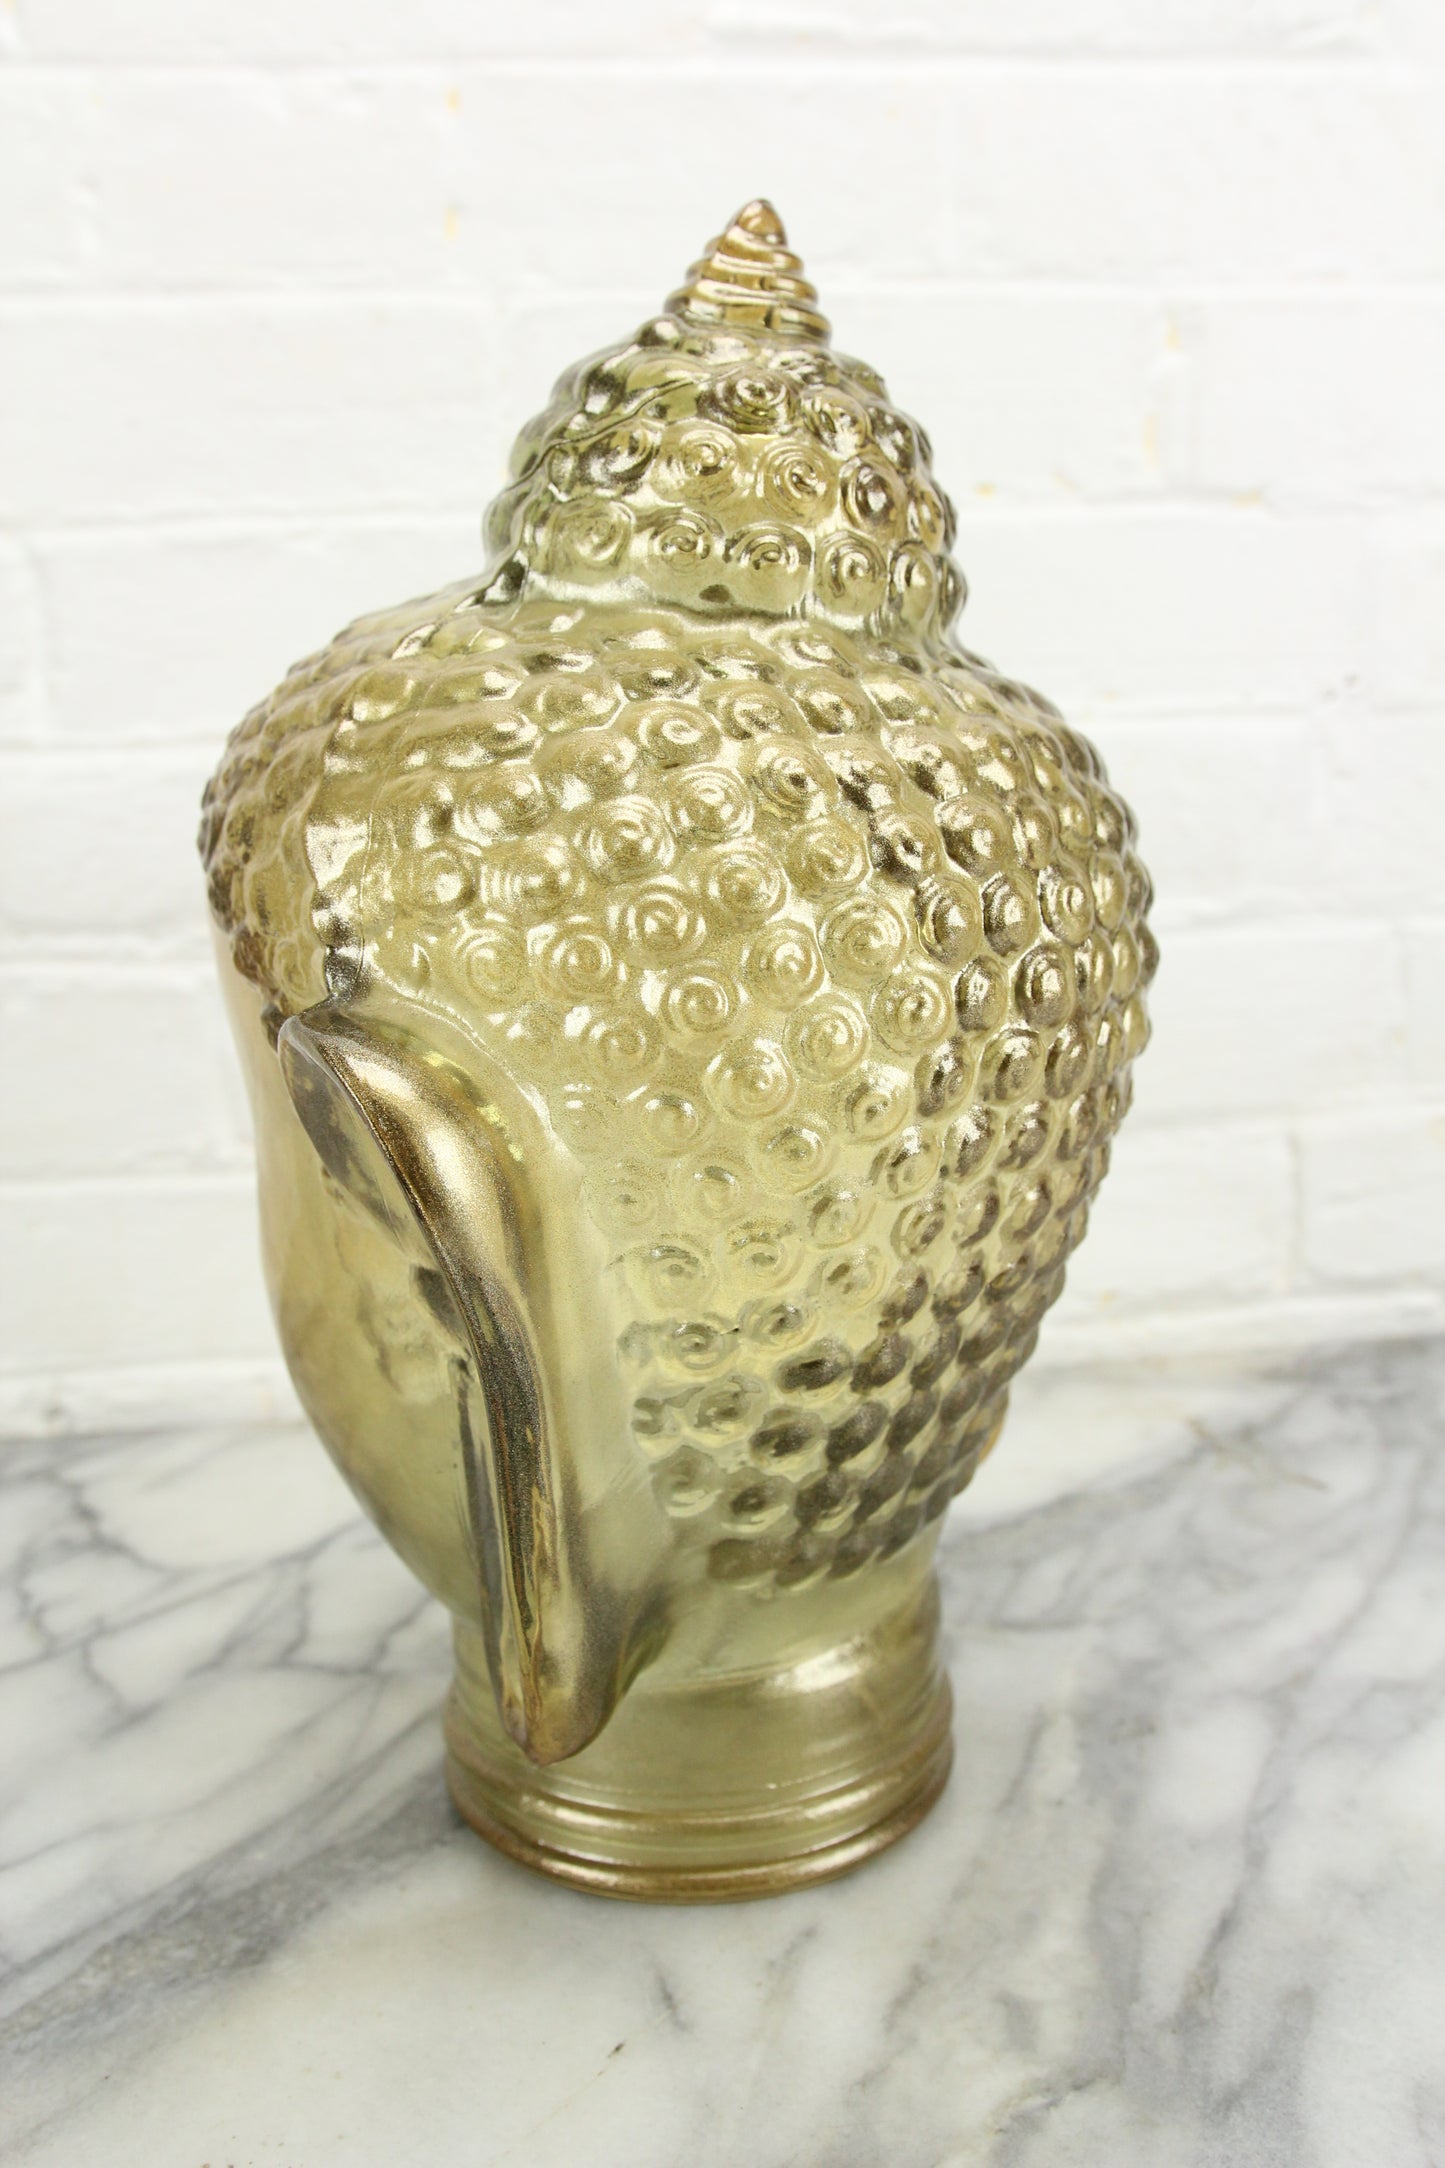 Gold-Tinted Glass Buddha Head